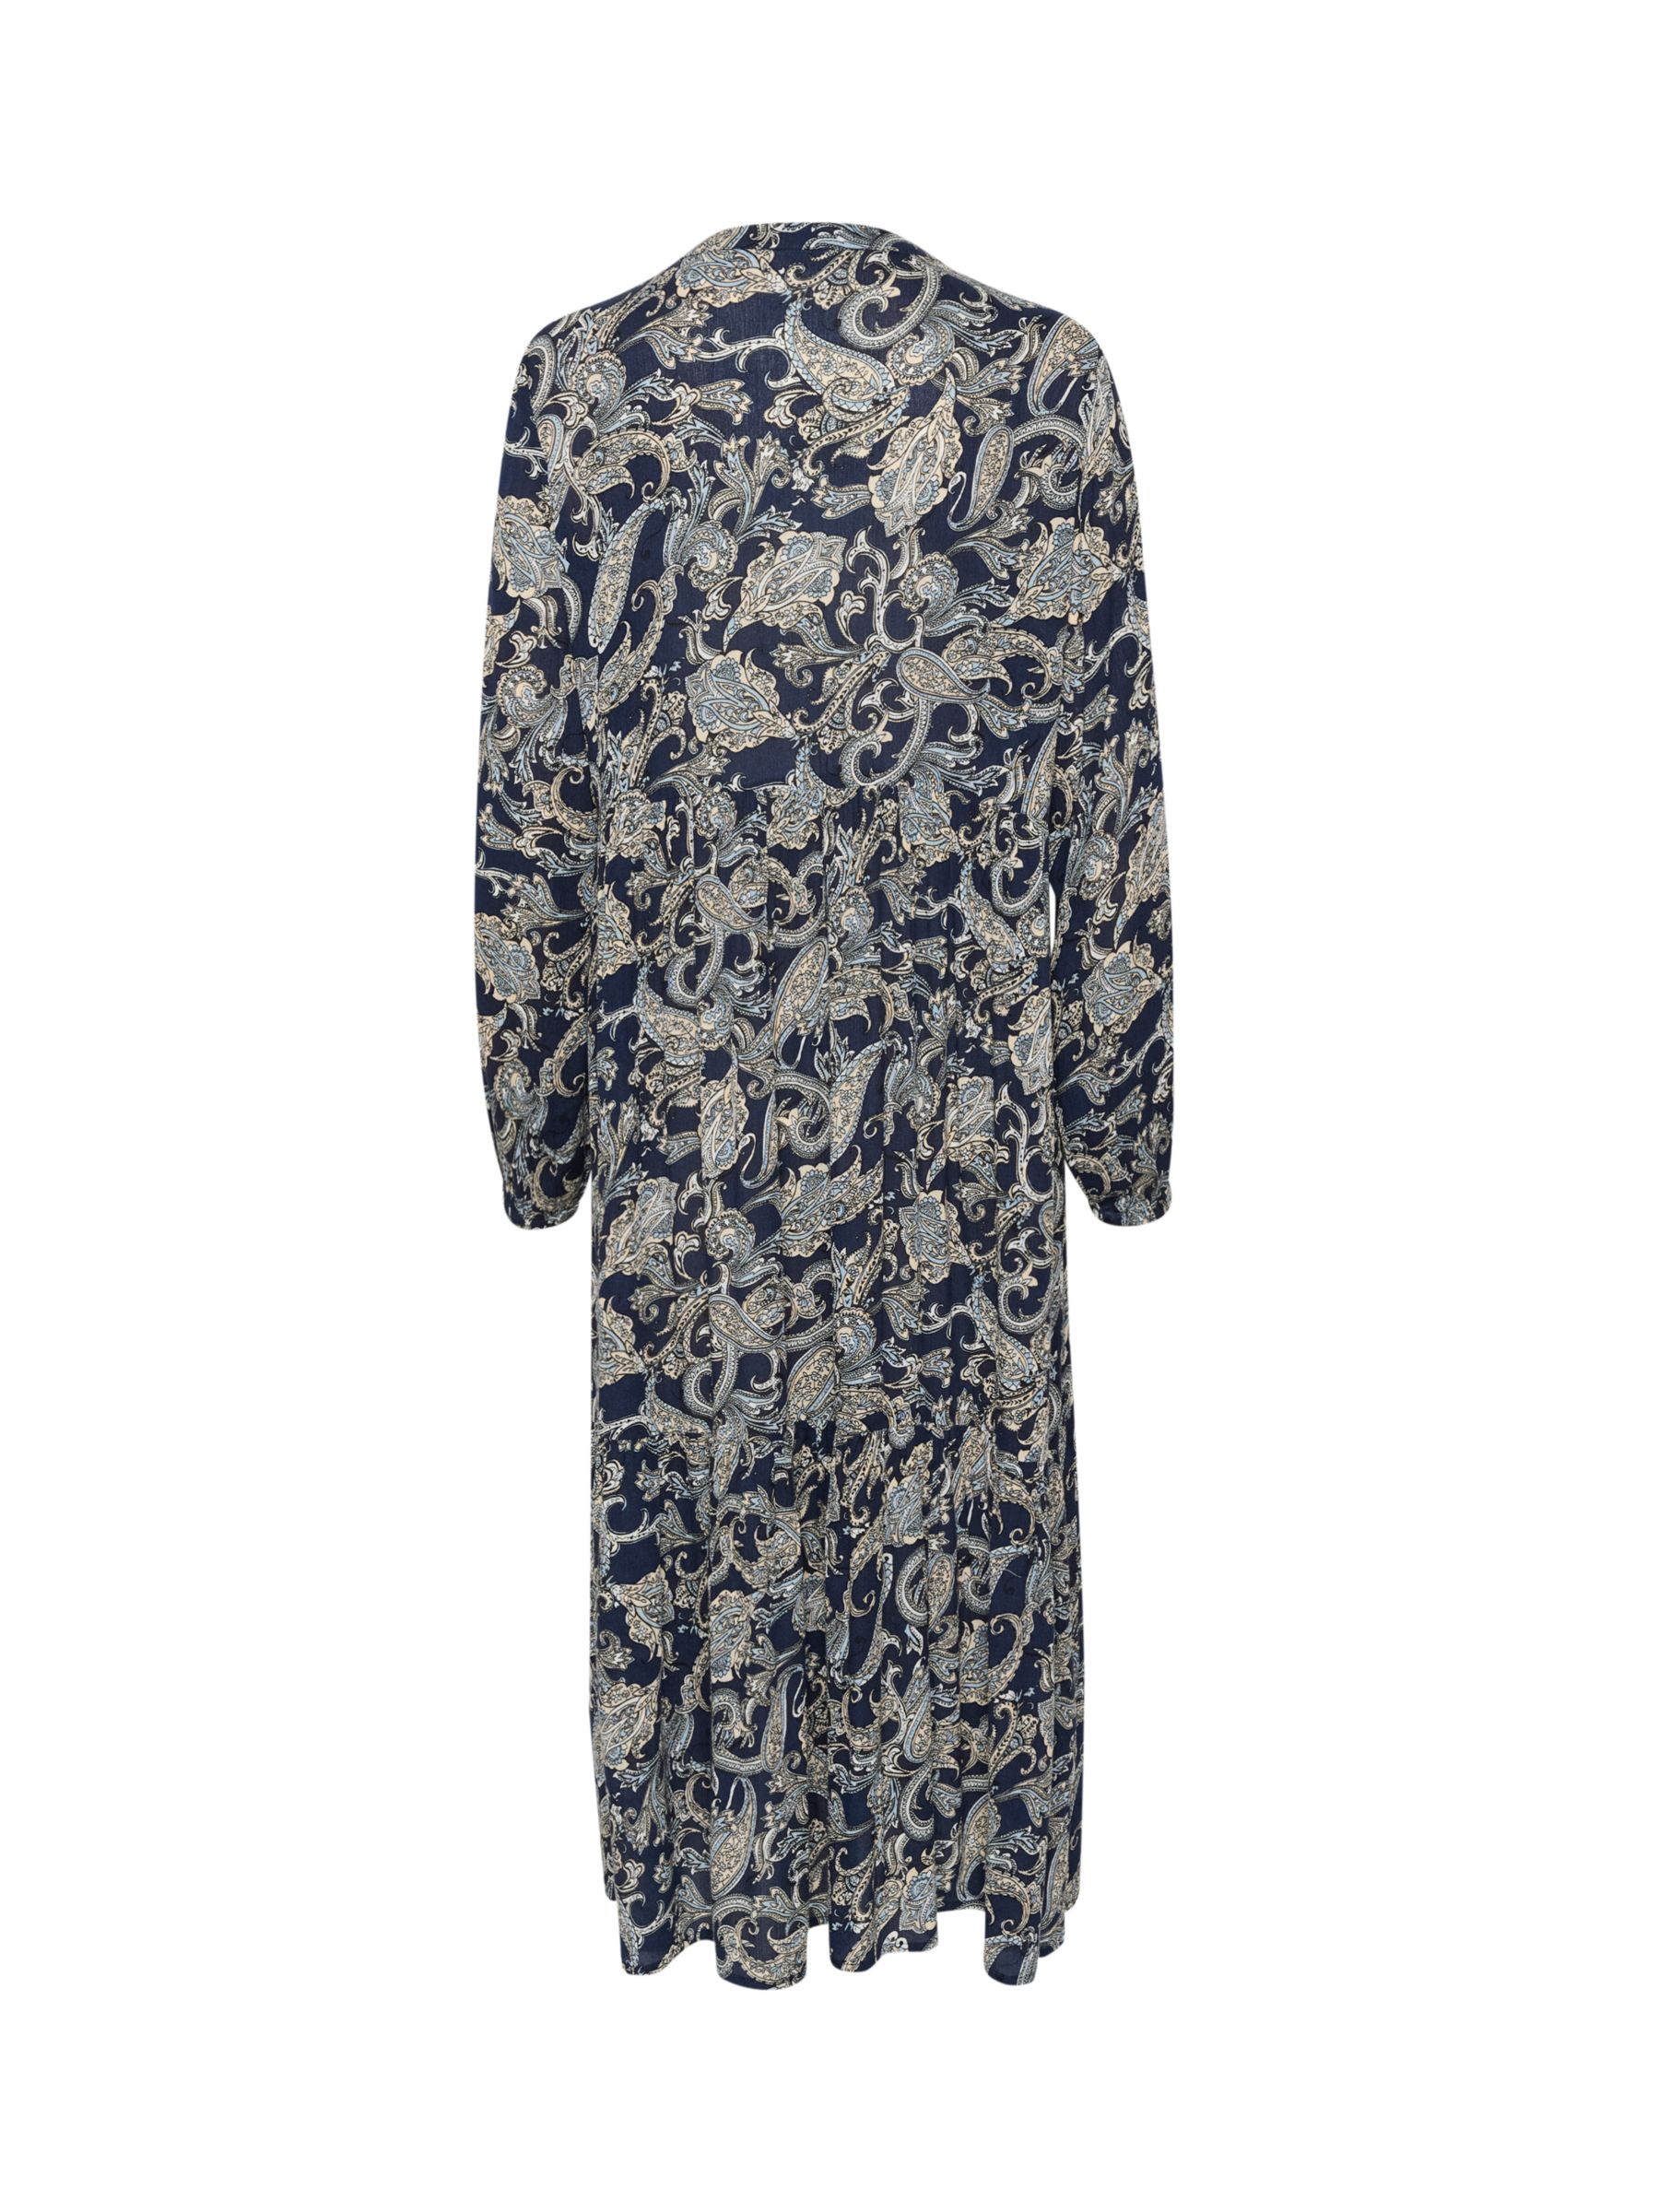 KAFFE Mille Amber Paisley Dress, Midnight at John Lewis & Partners